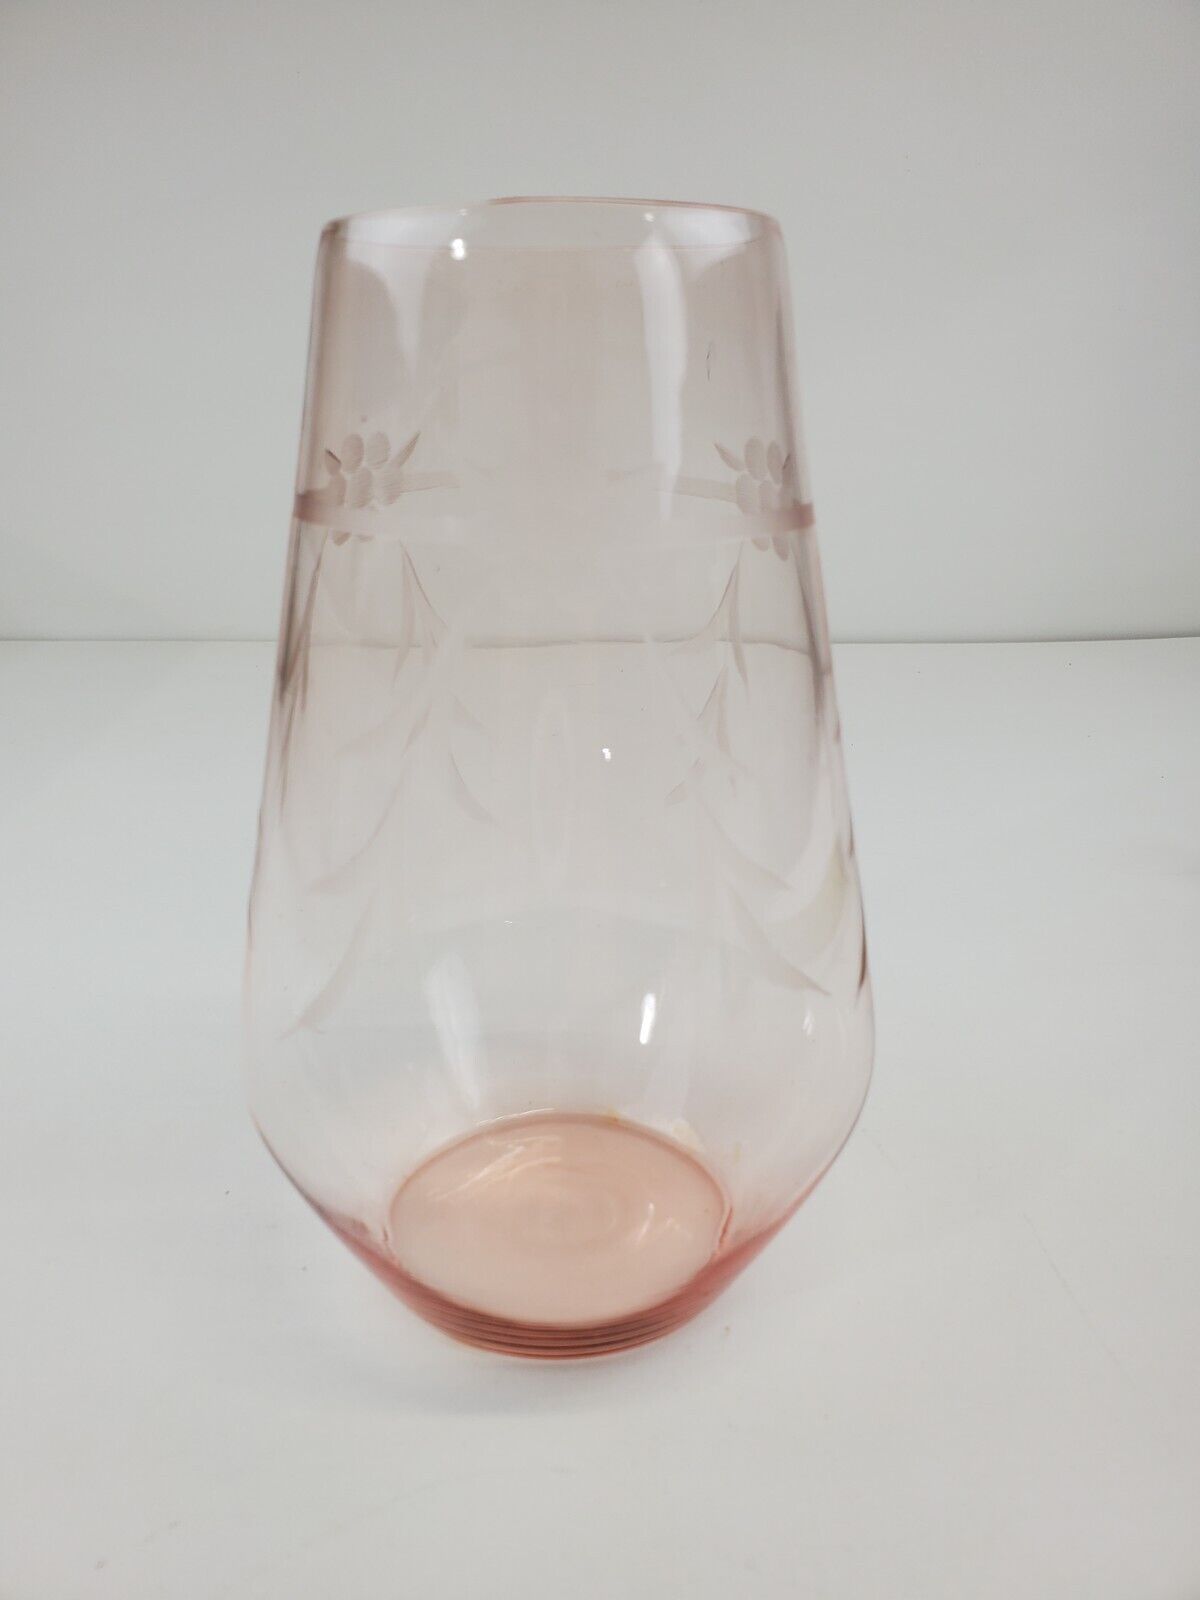 Pink Depression Glass Vase With Etched Grapes/Vine